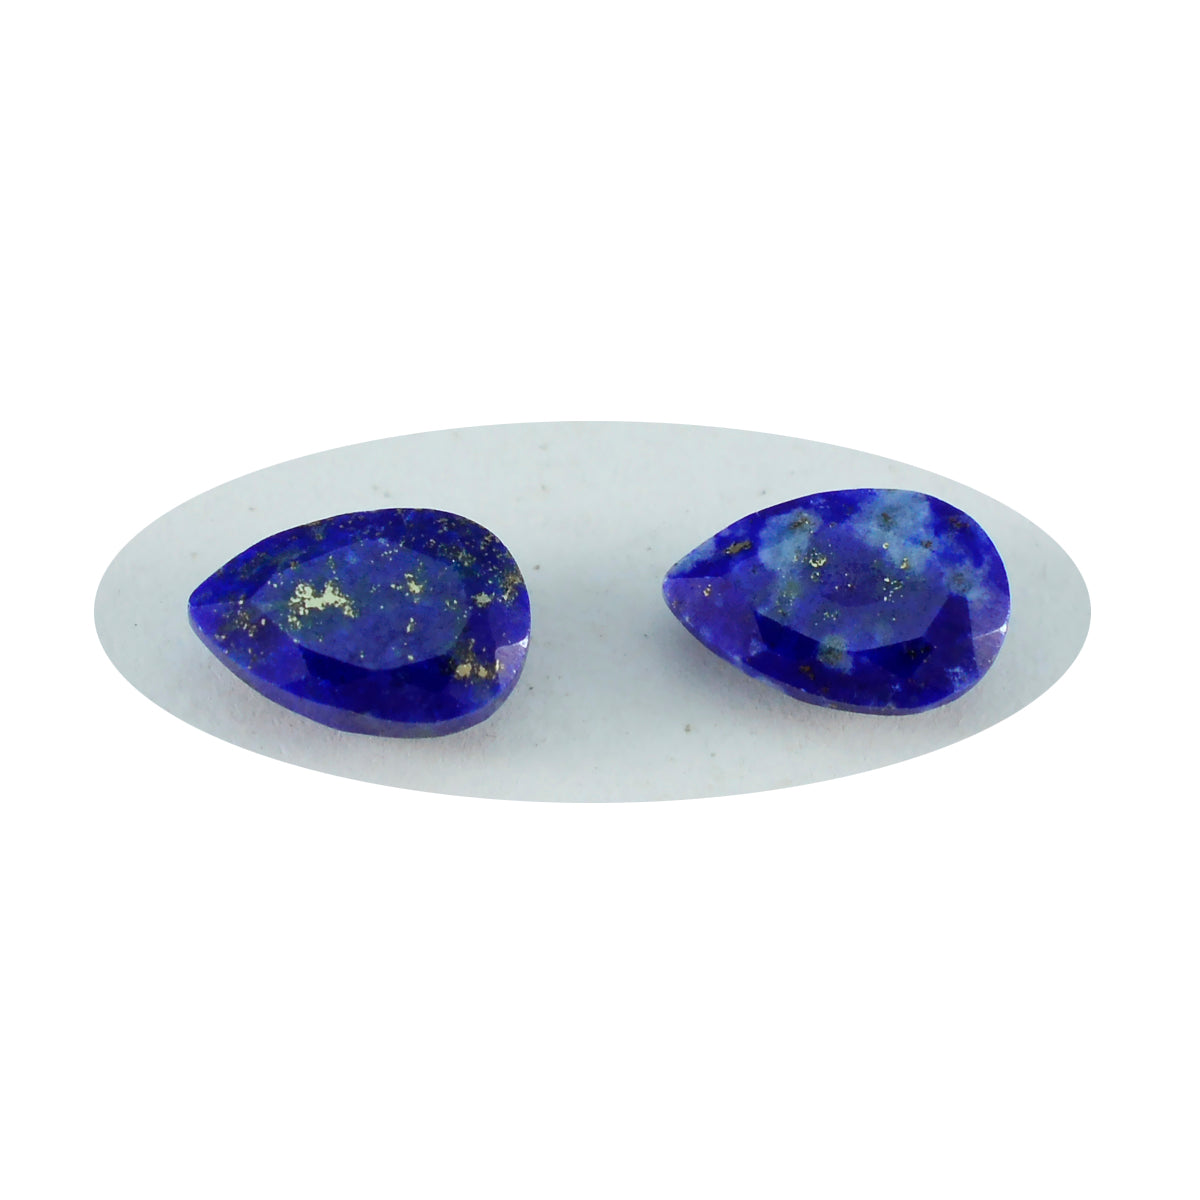 Riyogems 1PC Genuine Blue Lapis Lazuli Faceted 6x9 mm Pear Shape wonderful Quality Loose Gem